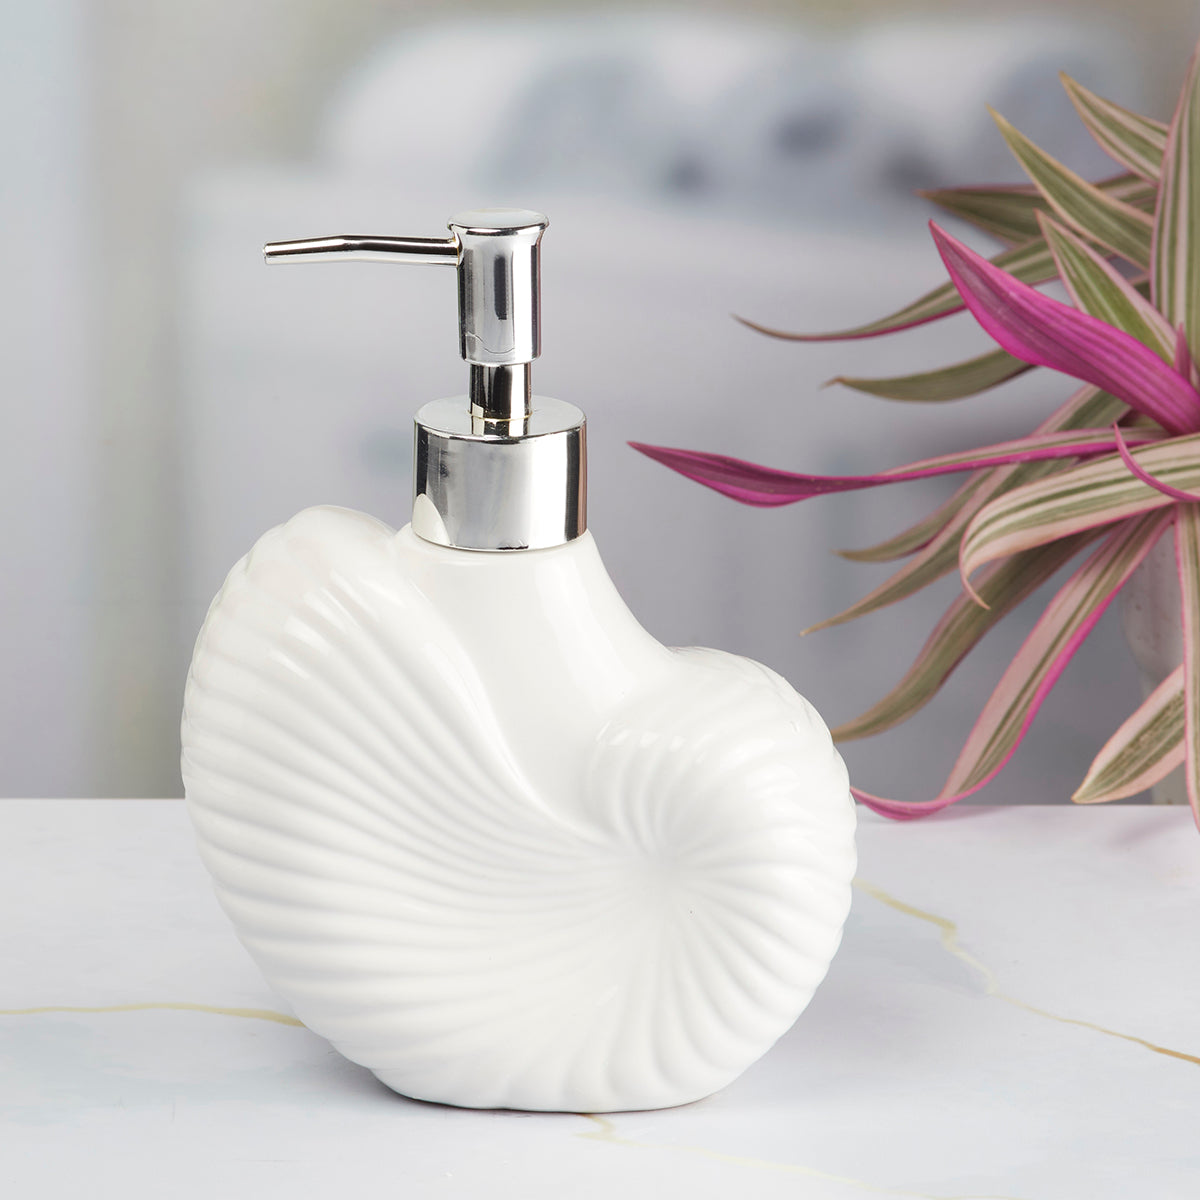 Ceramic Soap Dispenser handwash Pump for Bathroom, Set of 1, White (8463)